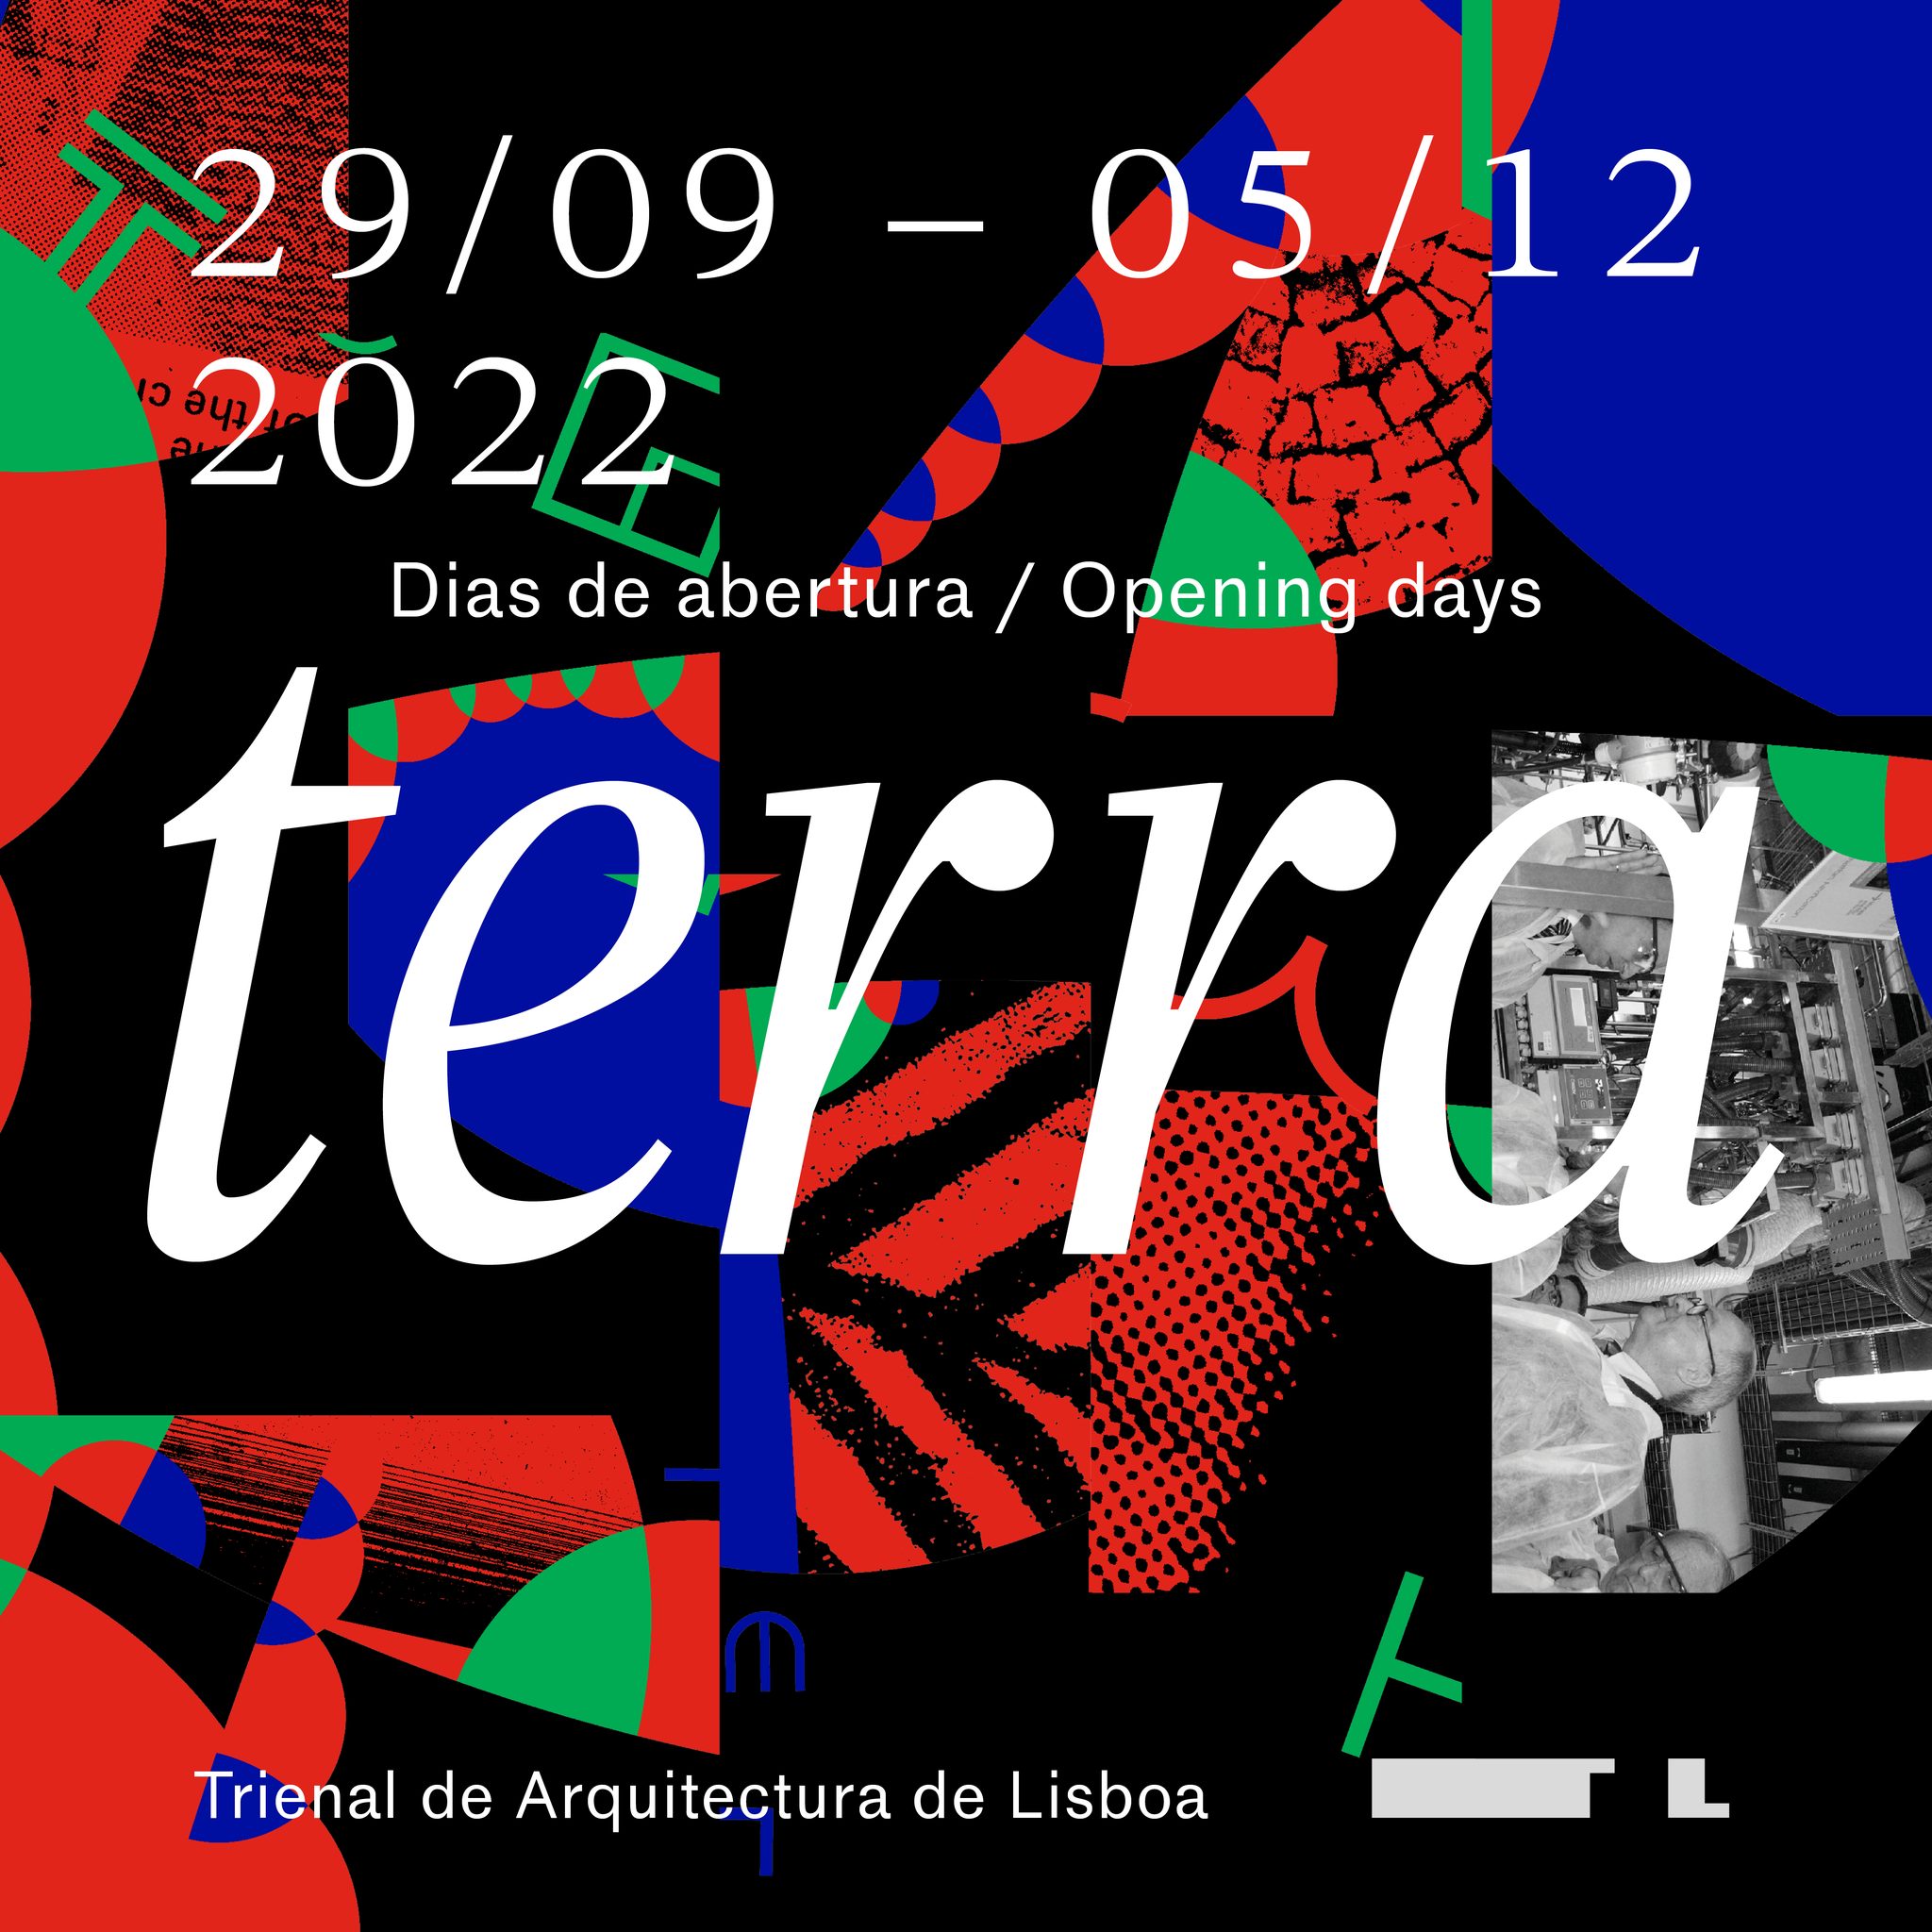 Shortlisted for Lisbon Triennale Millennium bcp Début Award